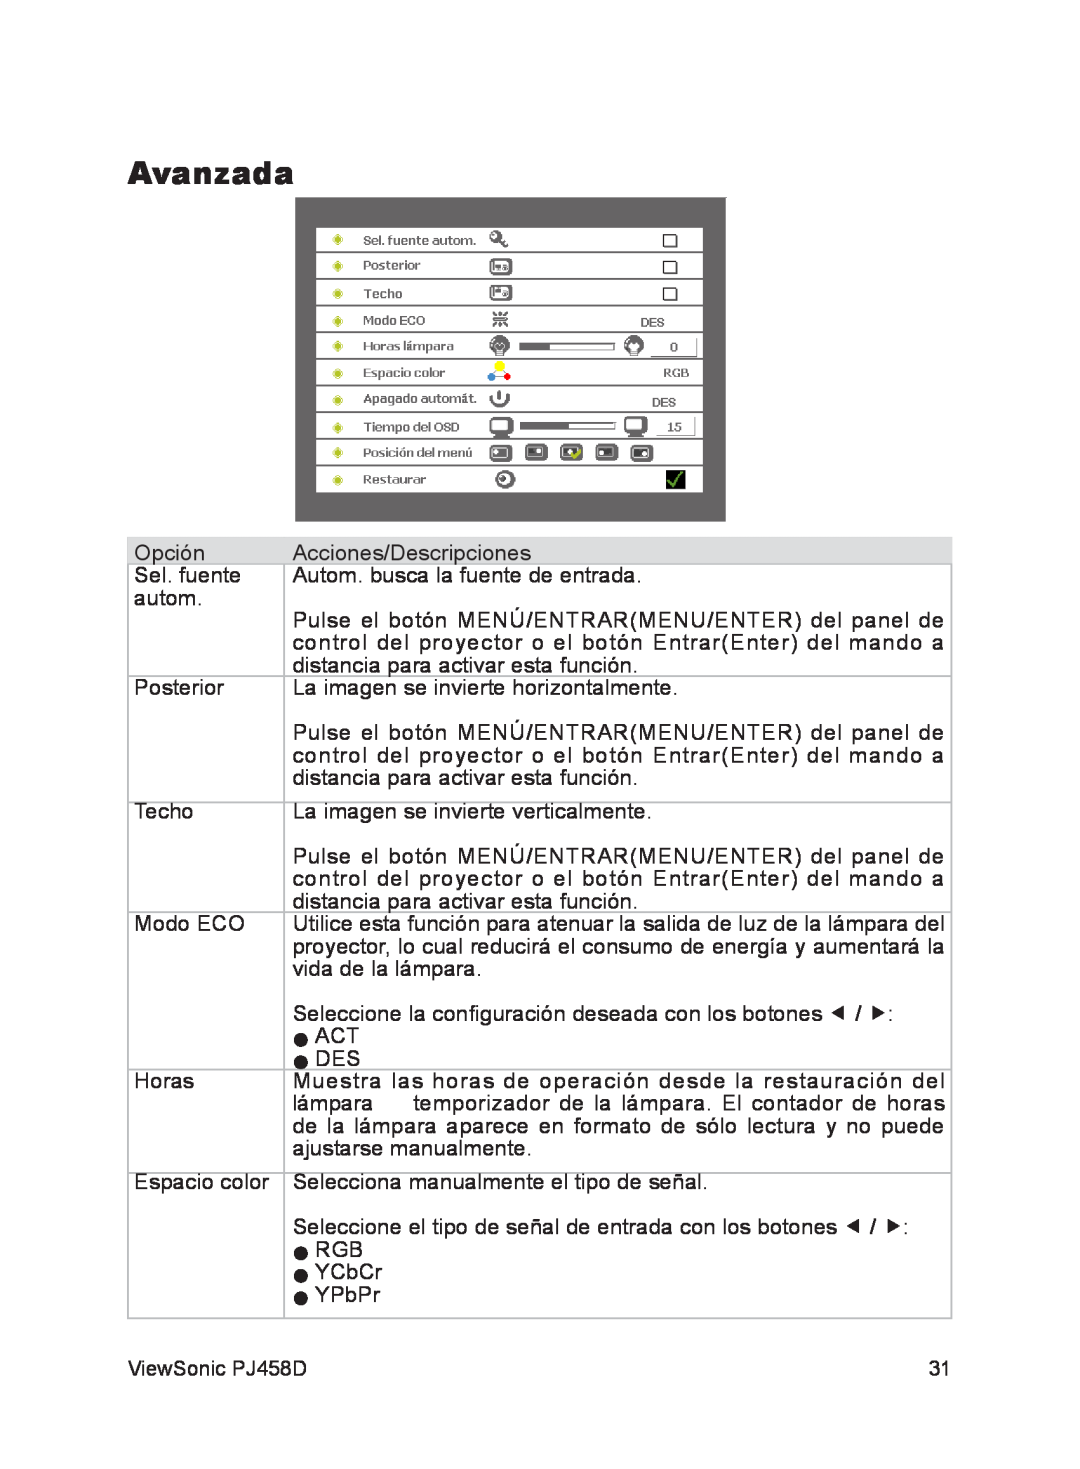 ViewSonic VS10872 manual Avanzada 